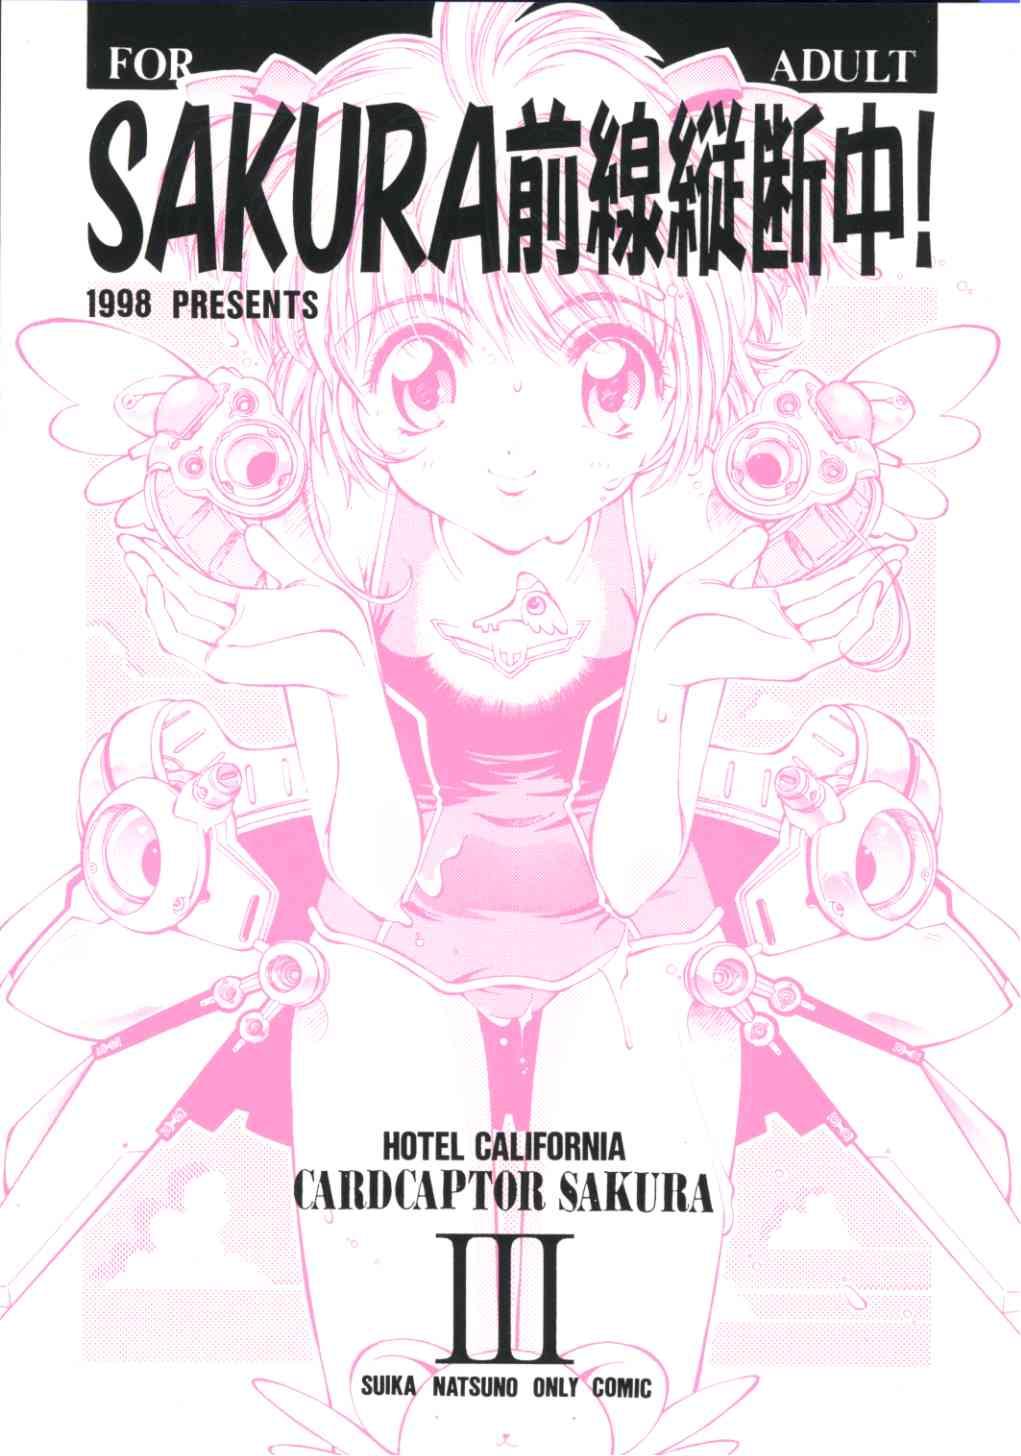 Dick Sucking Sakura Zensen Juudanchuu! III - Cardcaptor sakura Arabe - Page 1